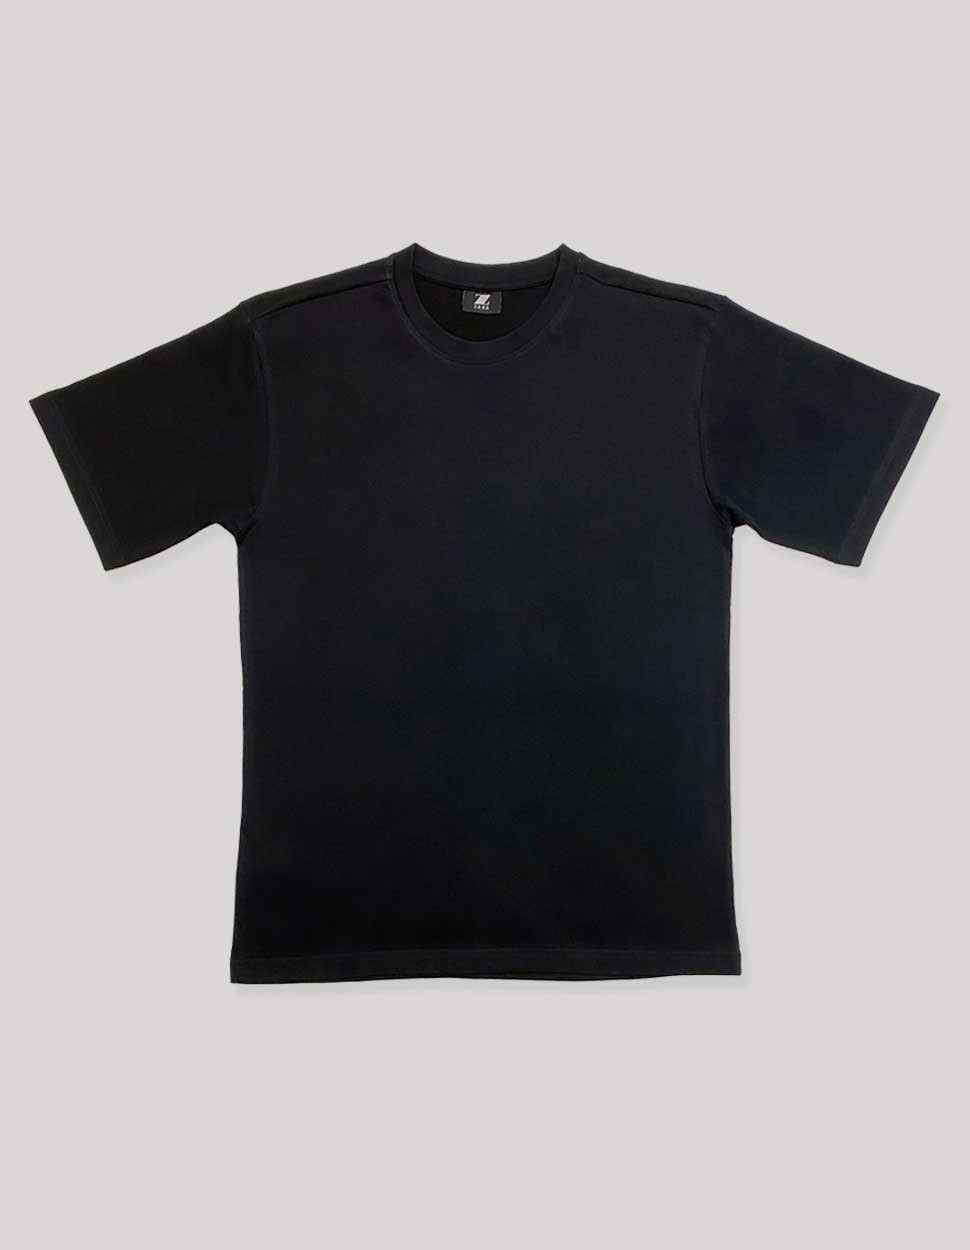 Solid Black Oversized T-Shirt